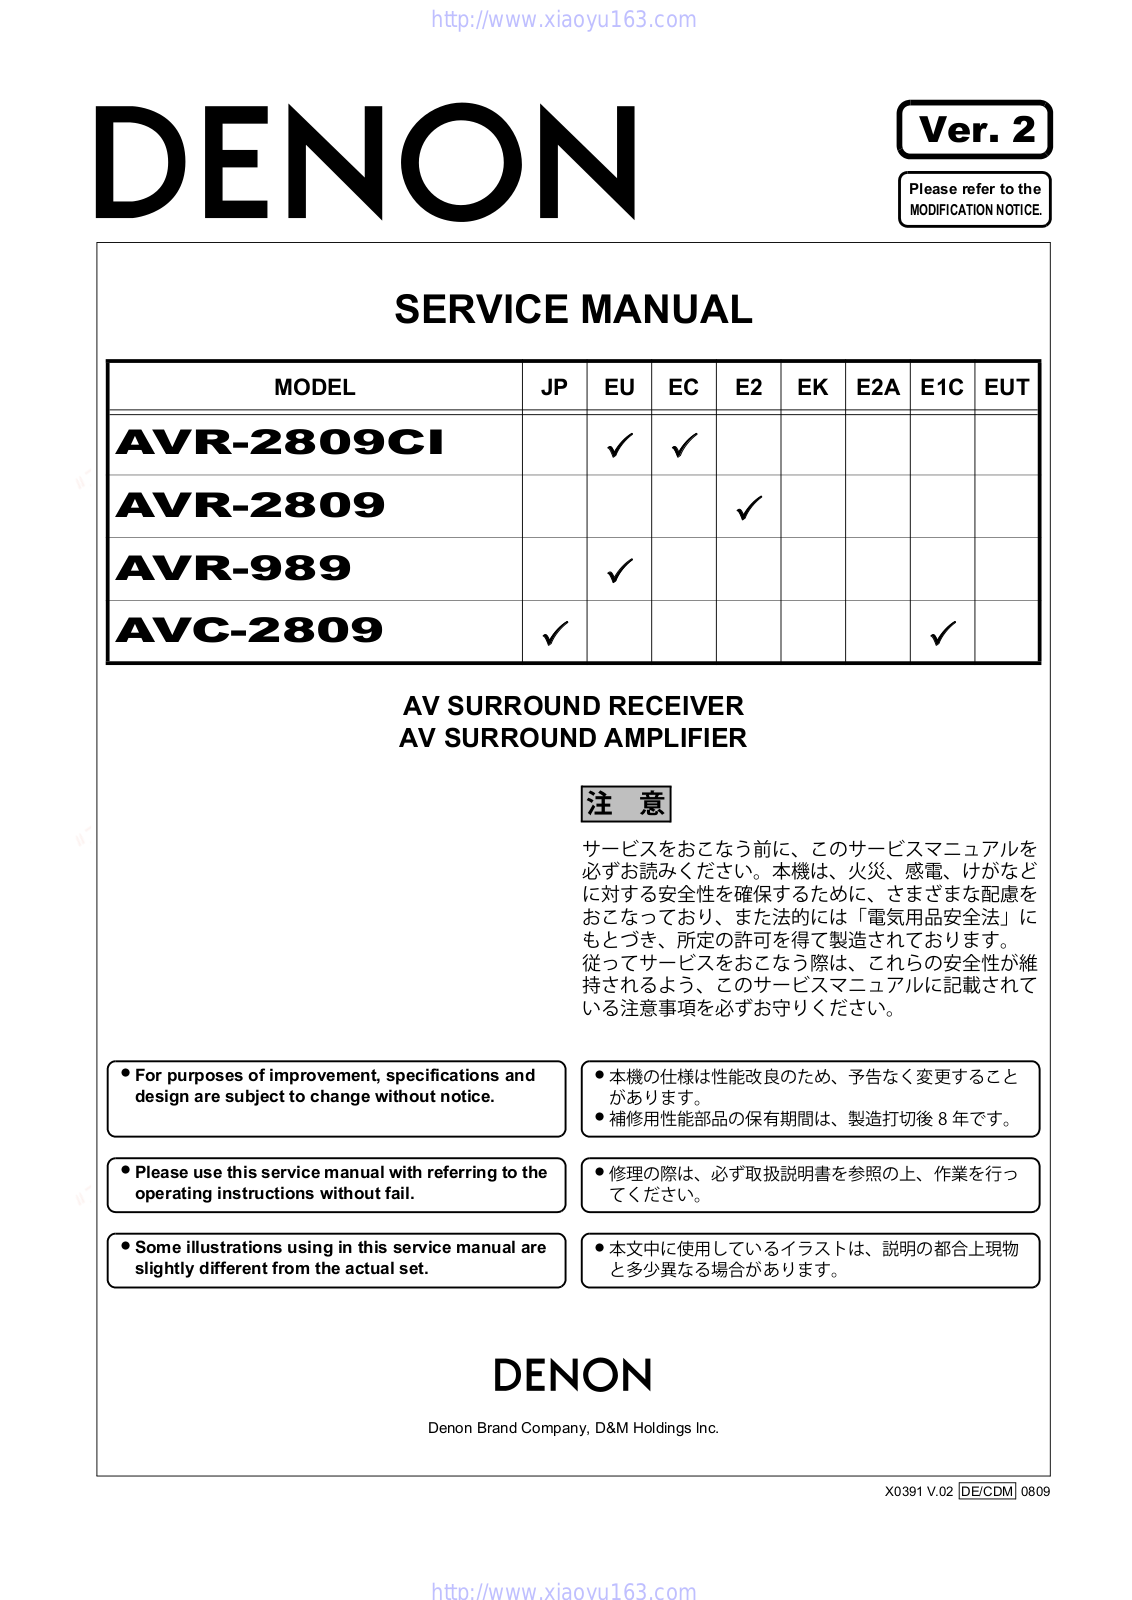 DENON AVR-2809CI, AVR-2809, AVR-989, AVC-2809 User Manual